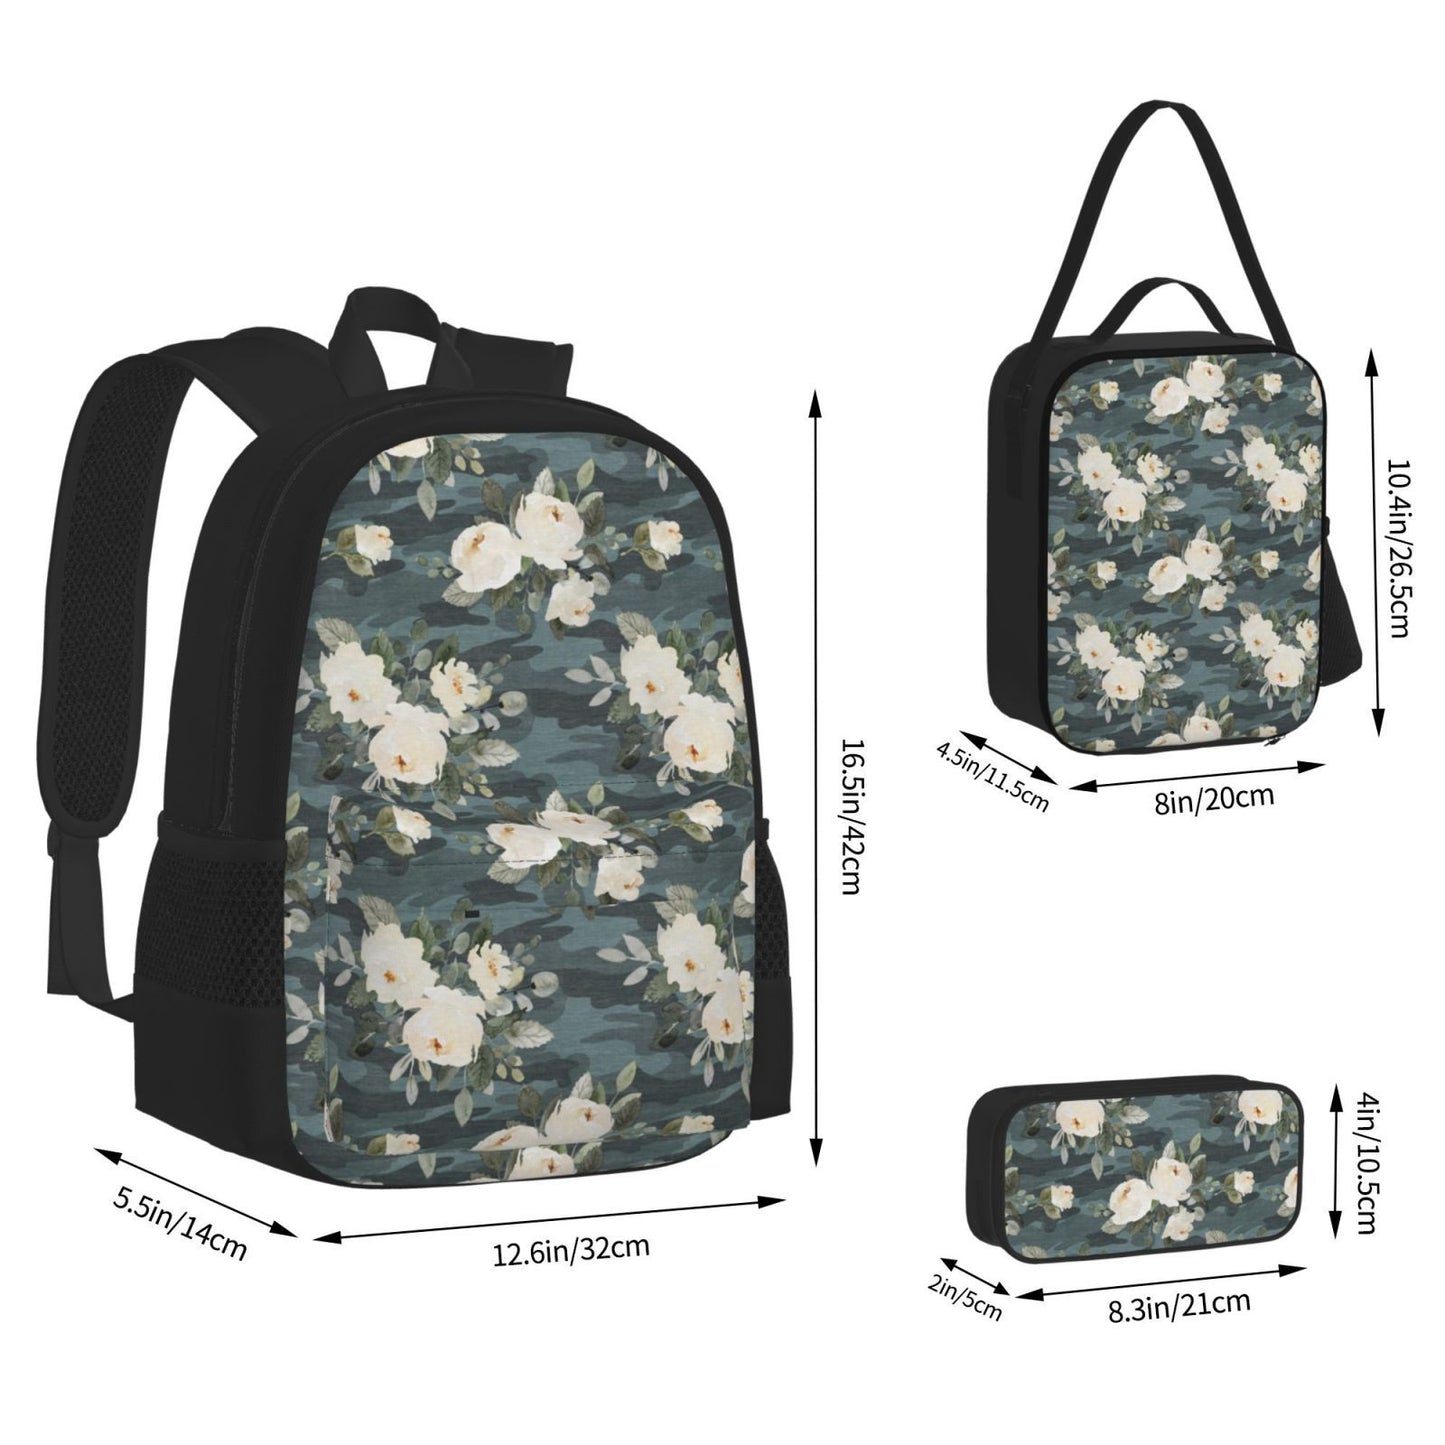 Floral Camo Backpack Set -  Preorder - Closing 7/18 - ETA mid Aug.